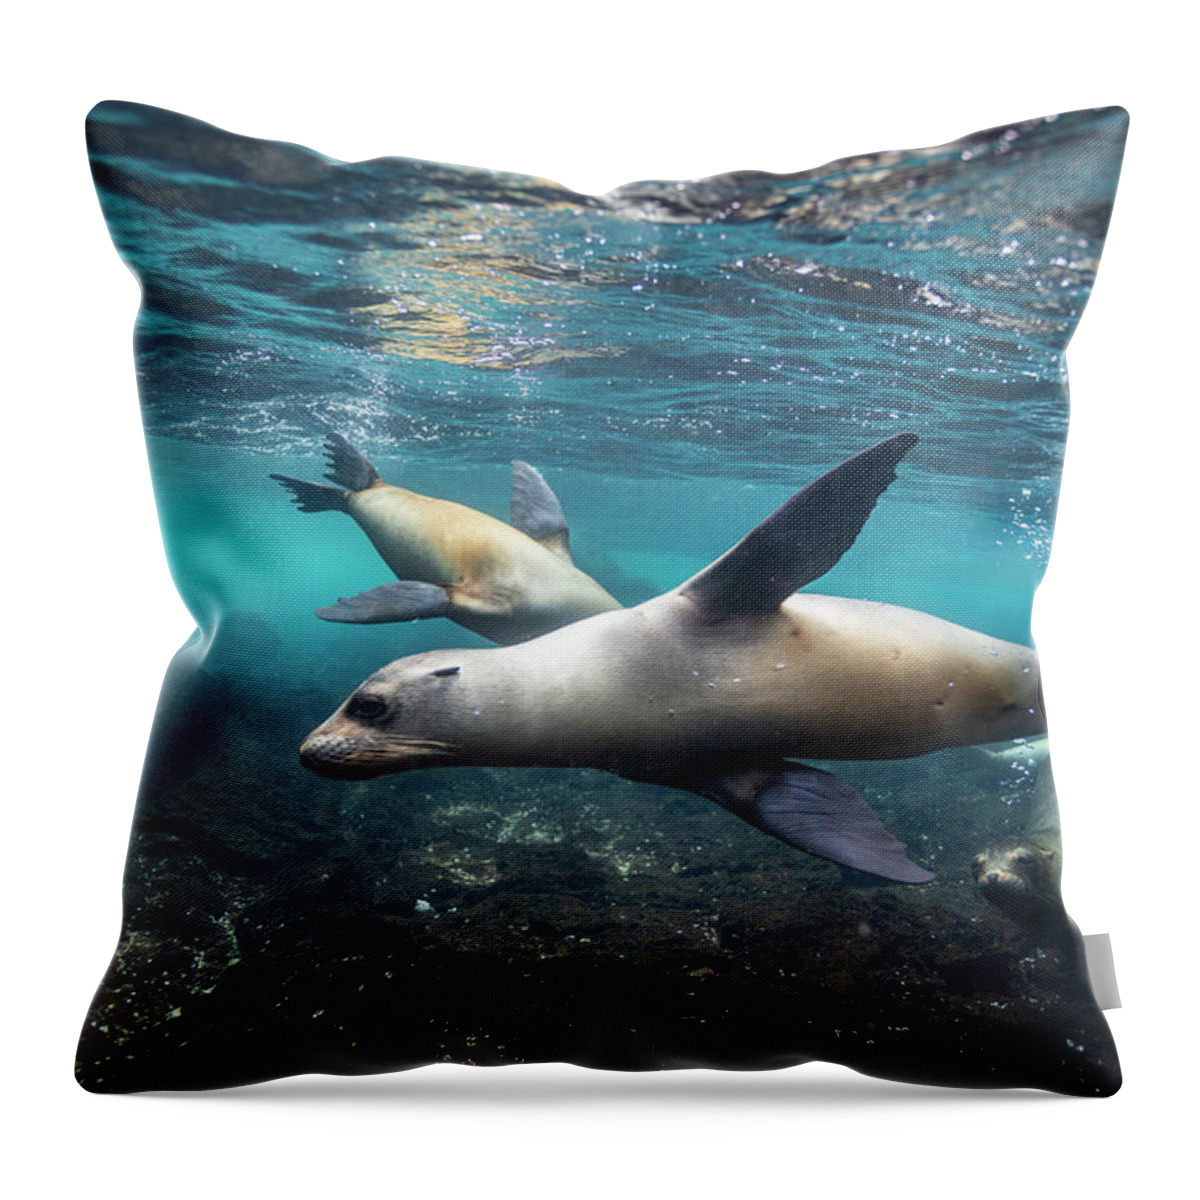 Suzi Eszterhas Throw Pillow featuring the photograph Galapagos Sea Lions Swimming by Suzi Eszterhas